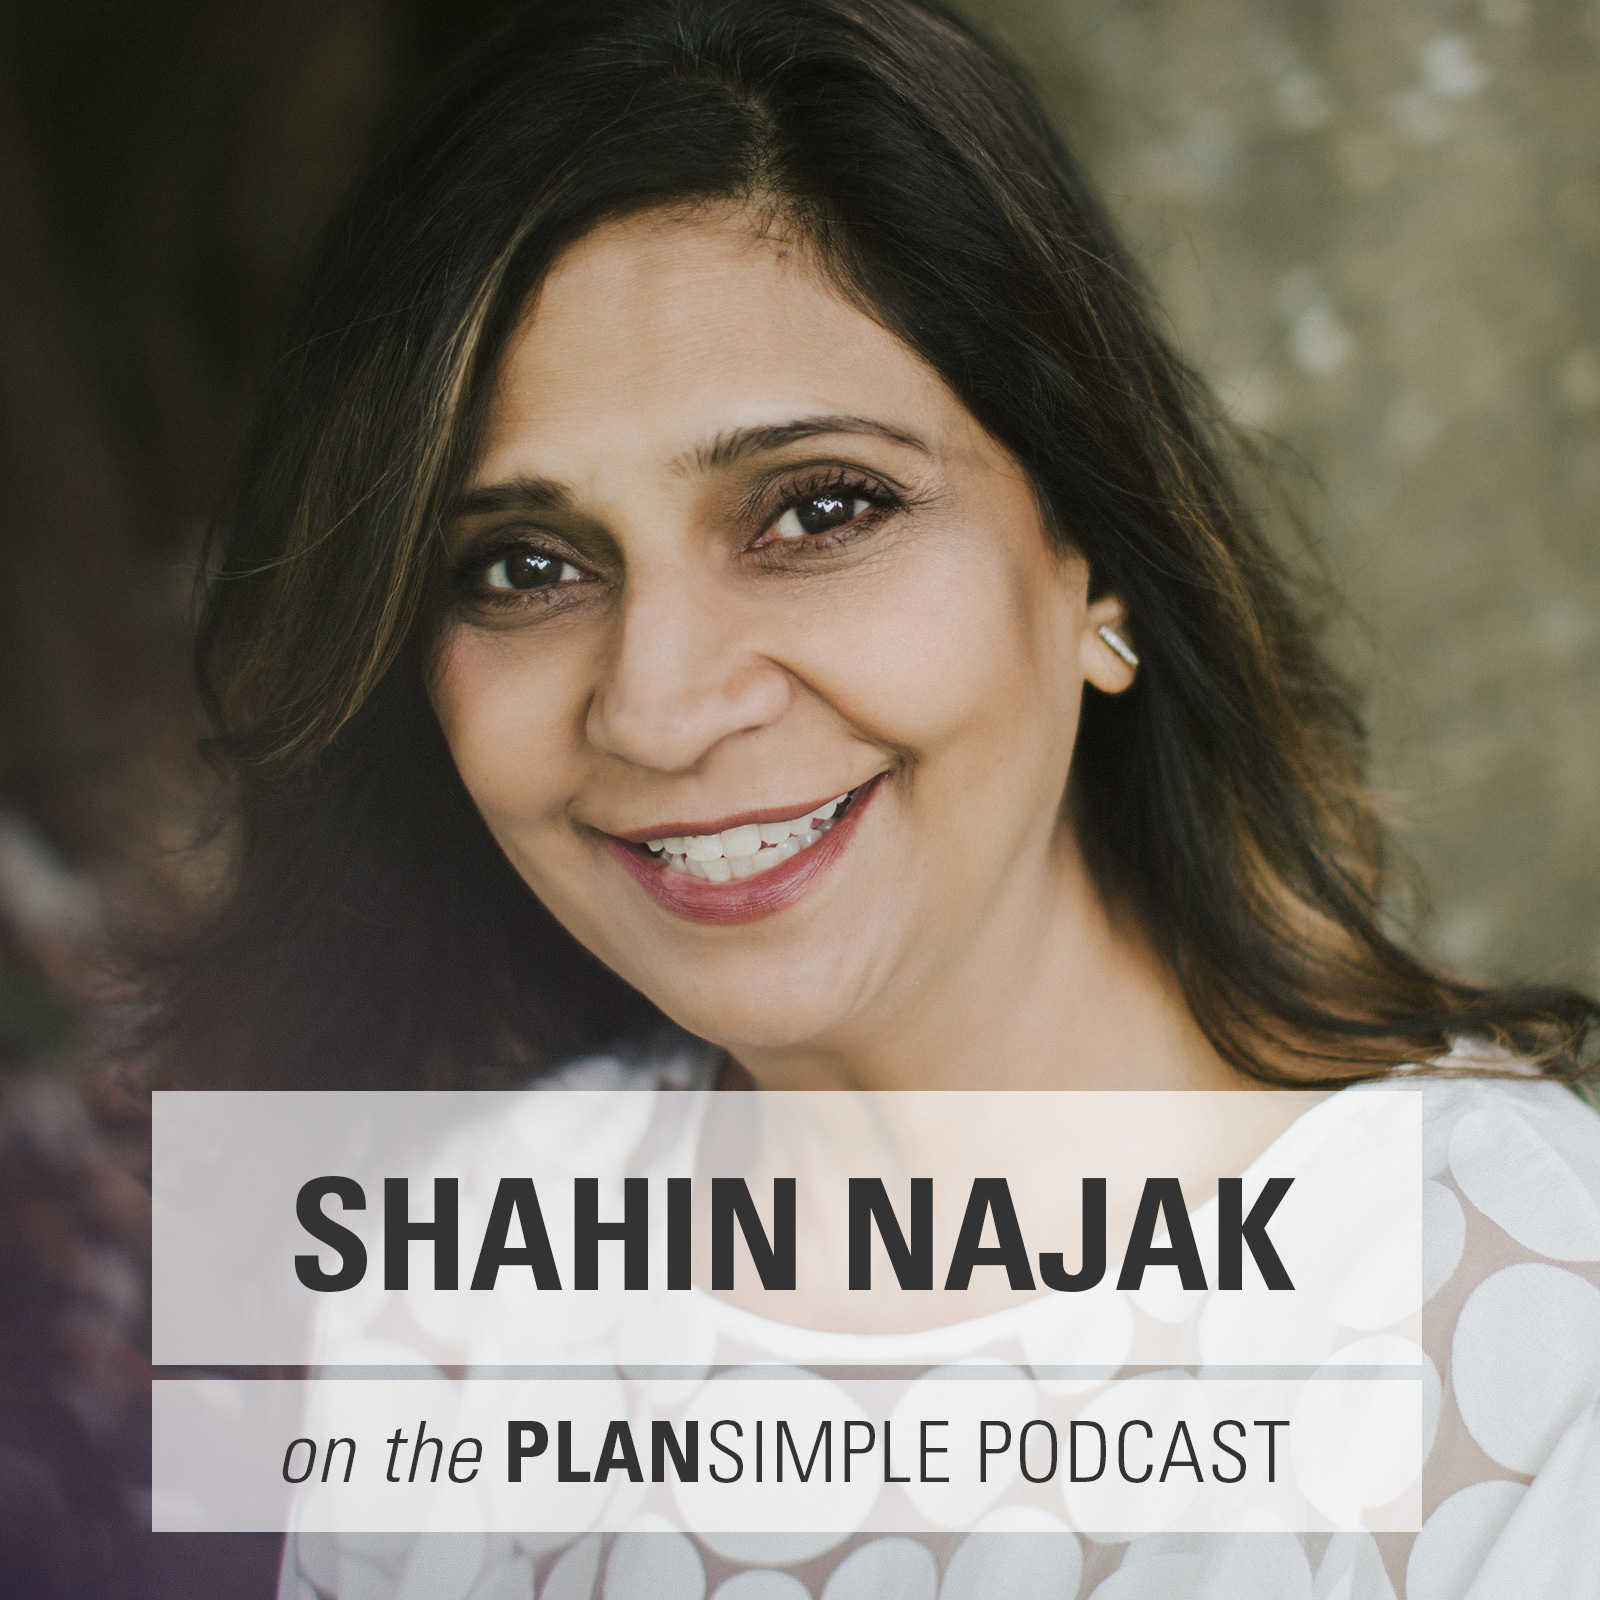 Mindfulness Simplified with Shahin Najak